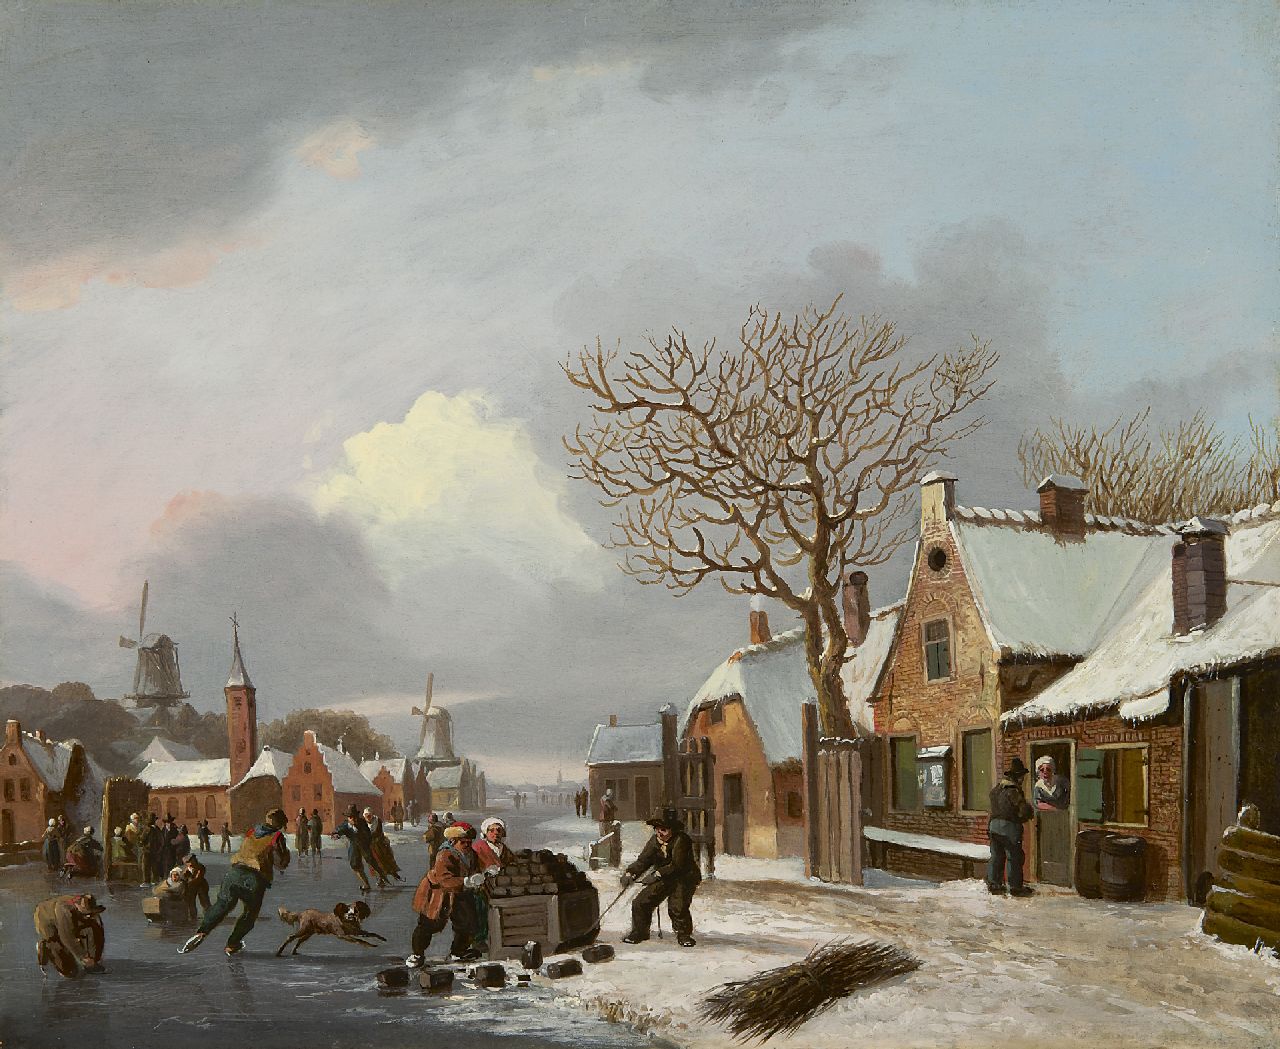 Stok J. van der | Jacobus van der Stok, A winter landscape with skaters, oil on panel 32.1 x 38.9 cm